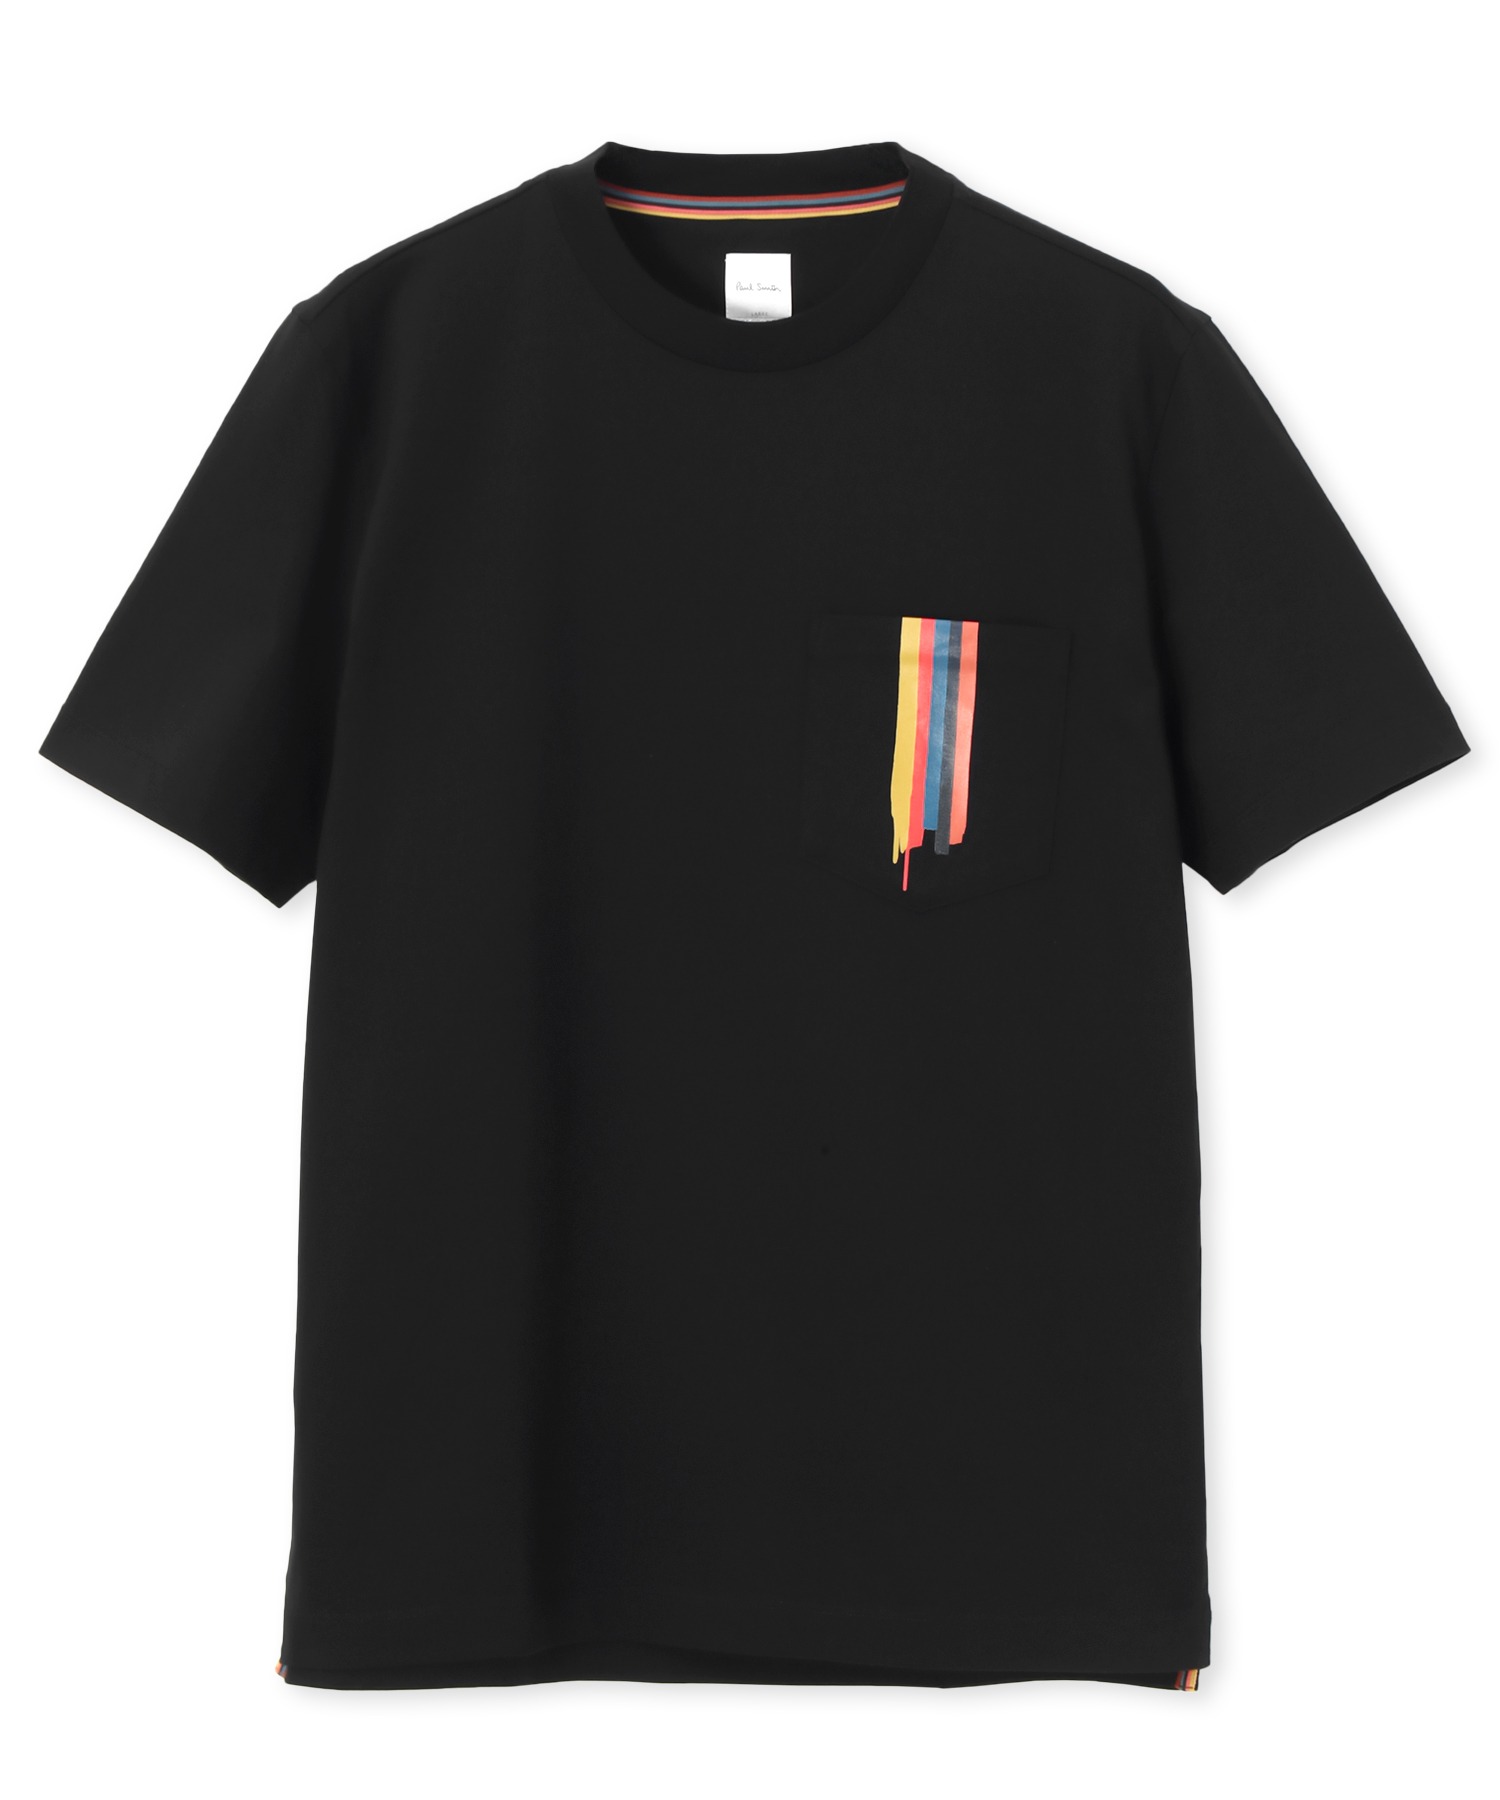 Paul Smith'Painted Artist Stripe' ポケットTシャツ / 213508 306U 